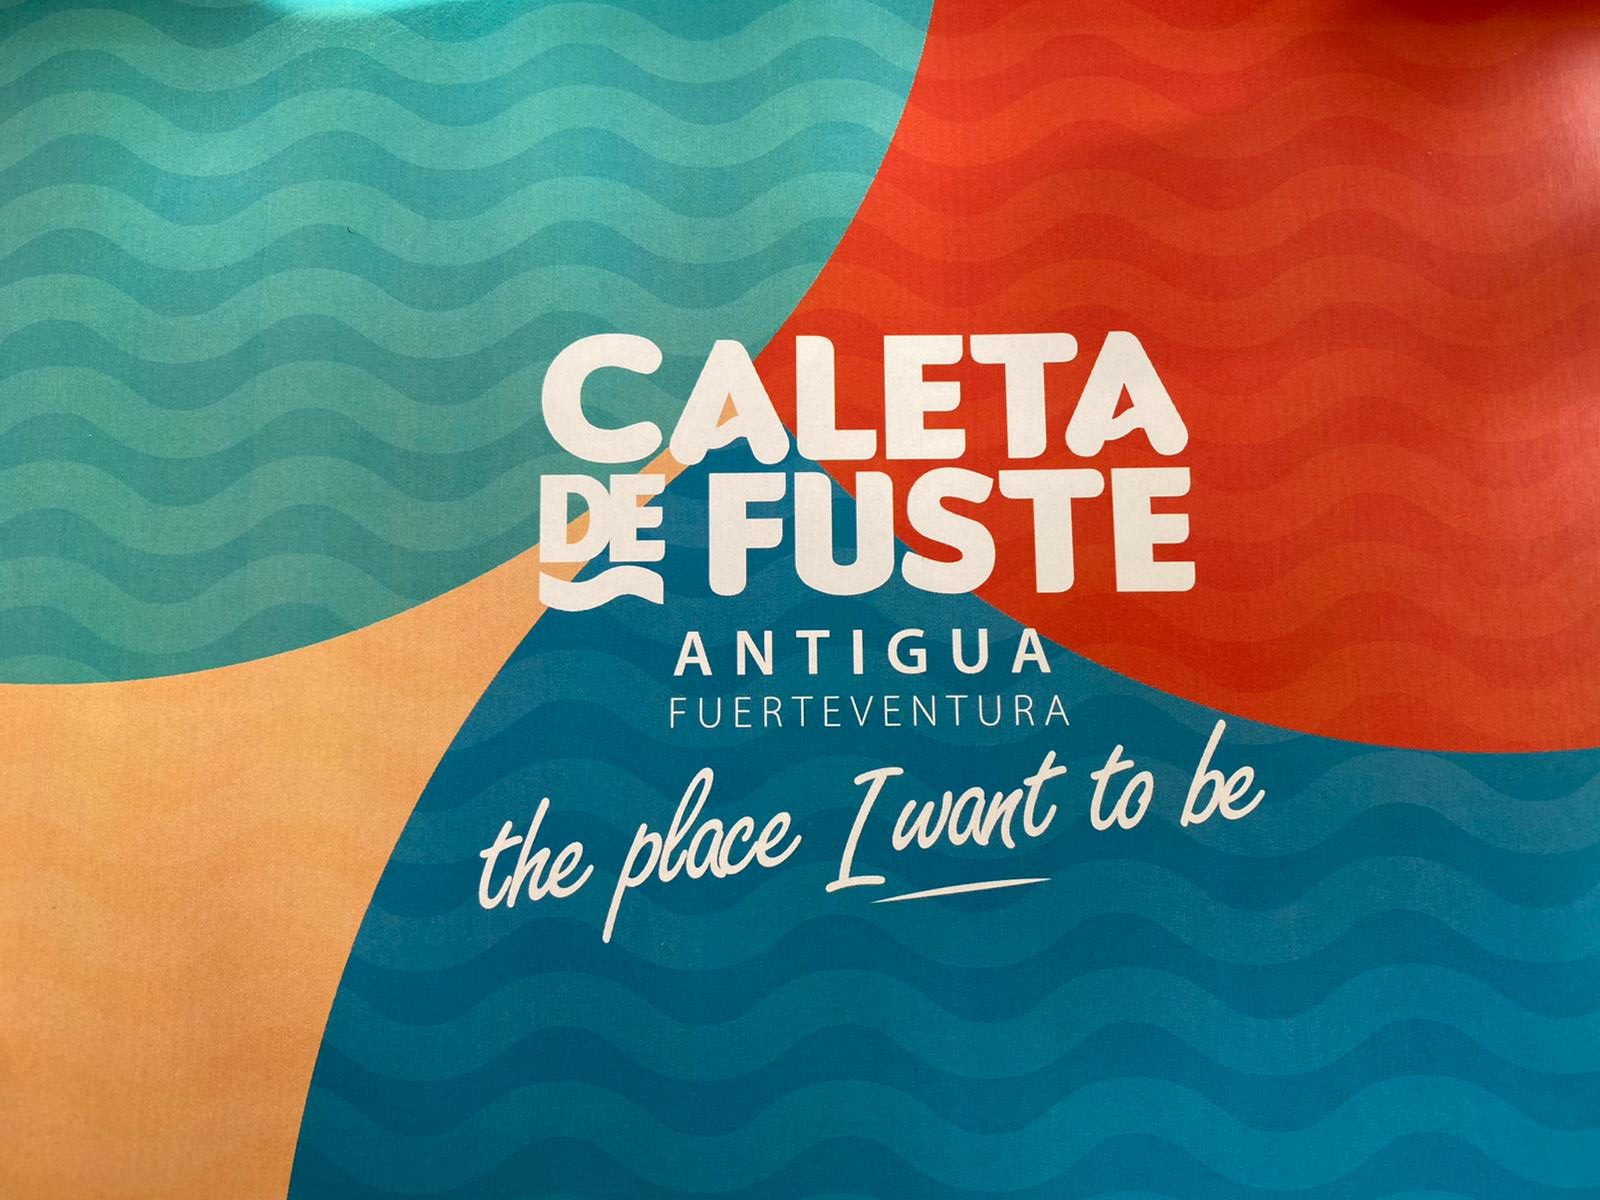 Caleta de Fuste Antigua Fuerteventura "The place I want to be"